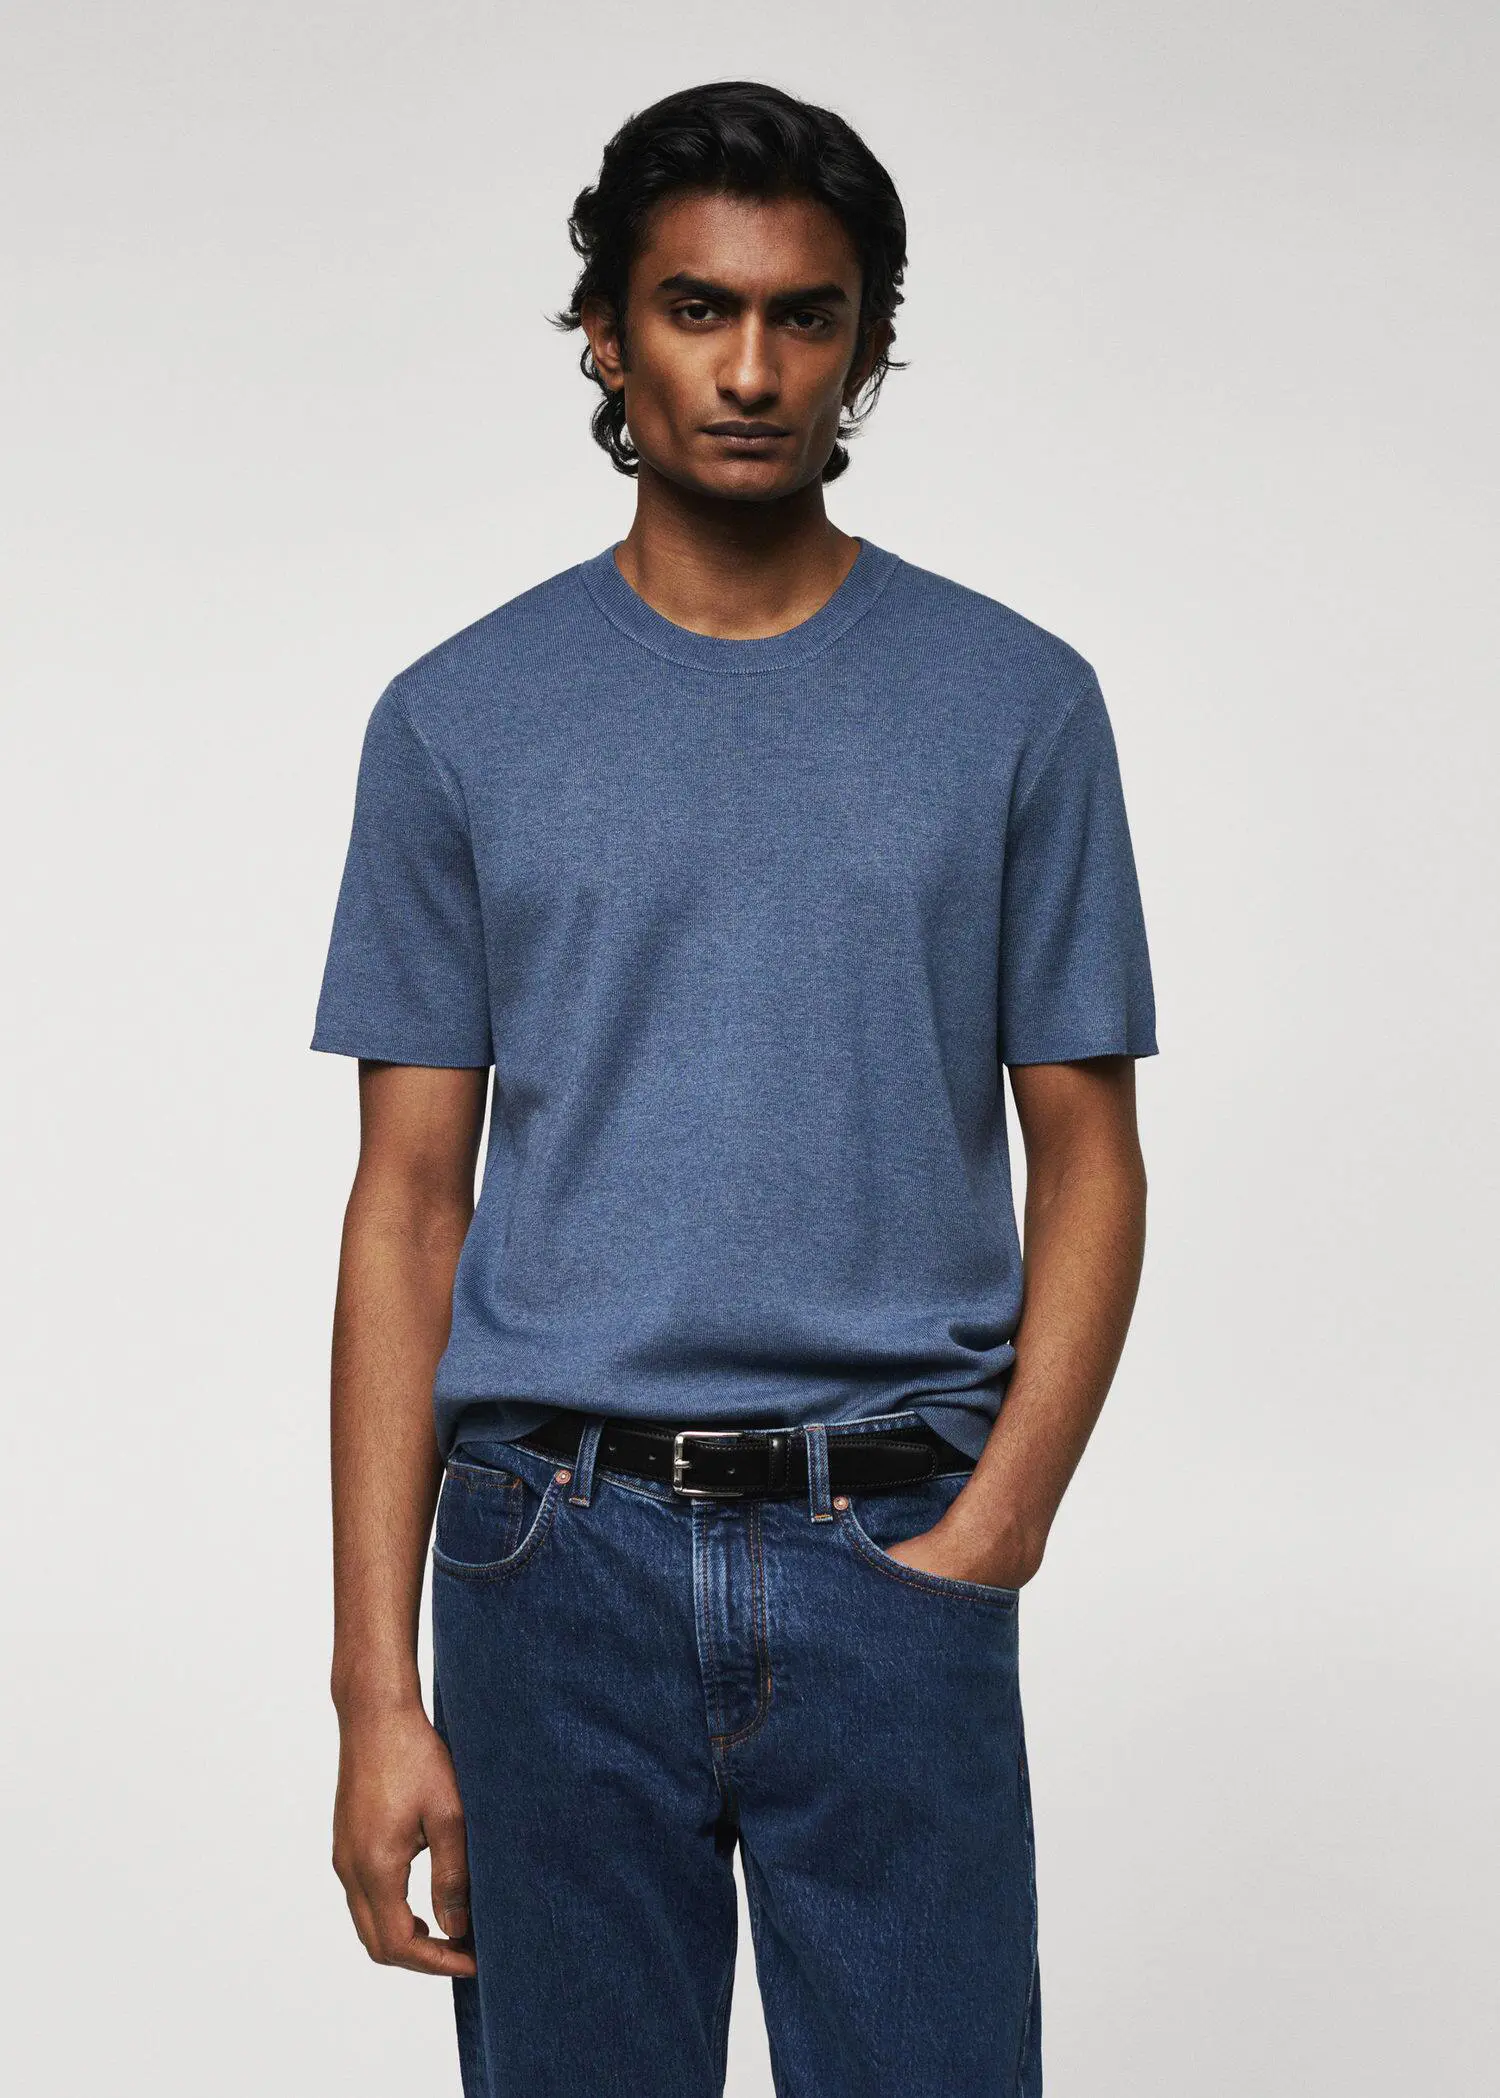 Mango Cotton fine-knit t-shirt. a man wearing a blue shirt and jeans. 